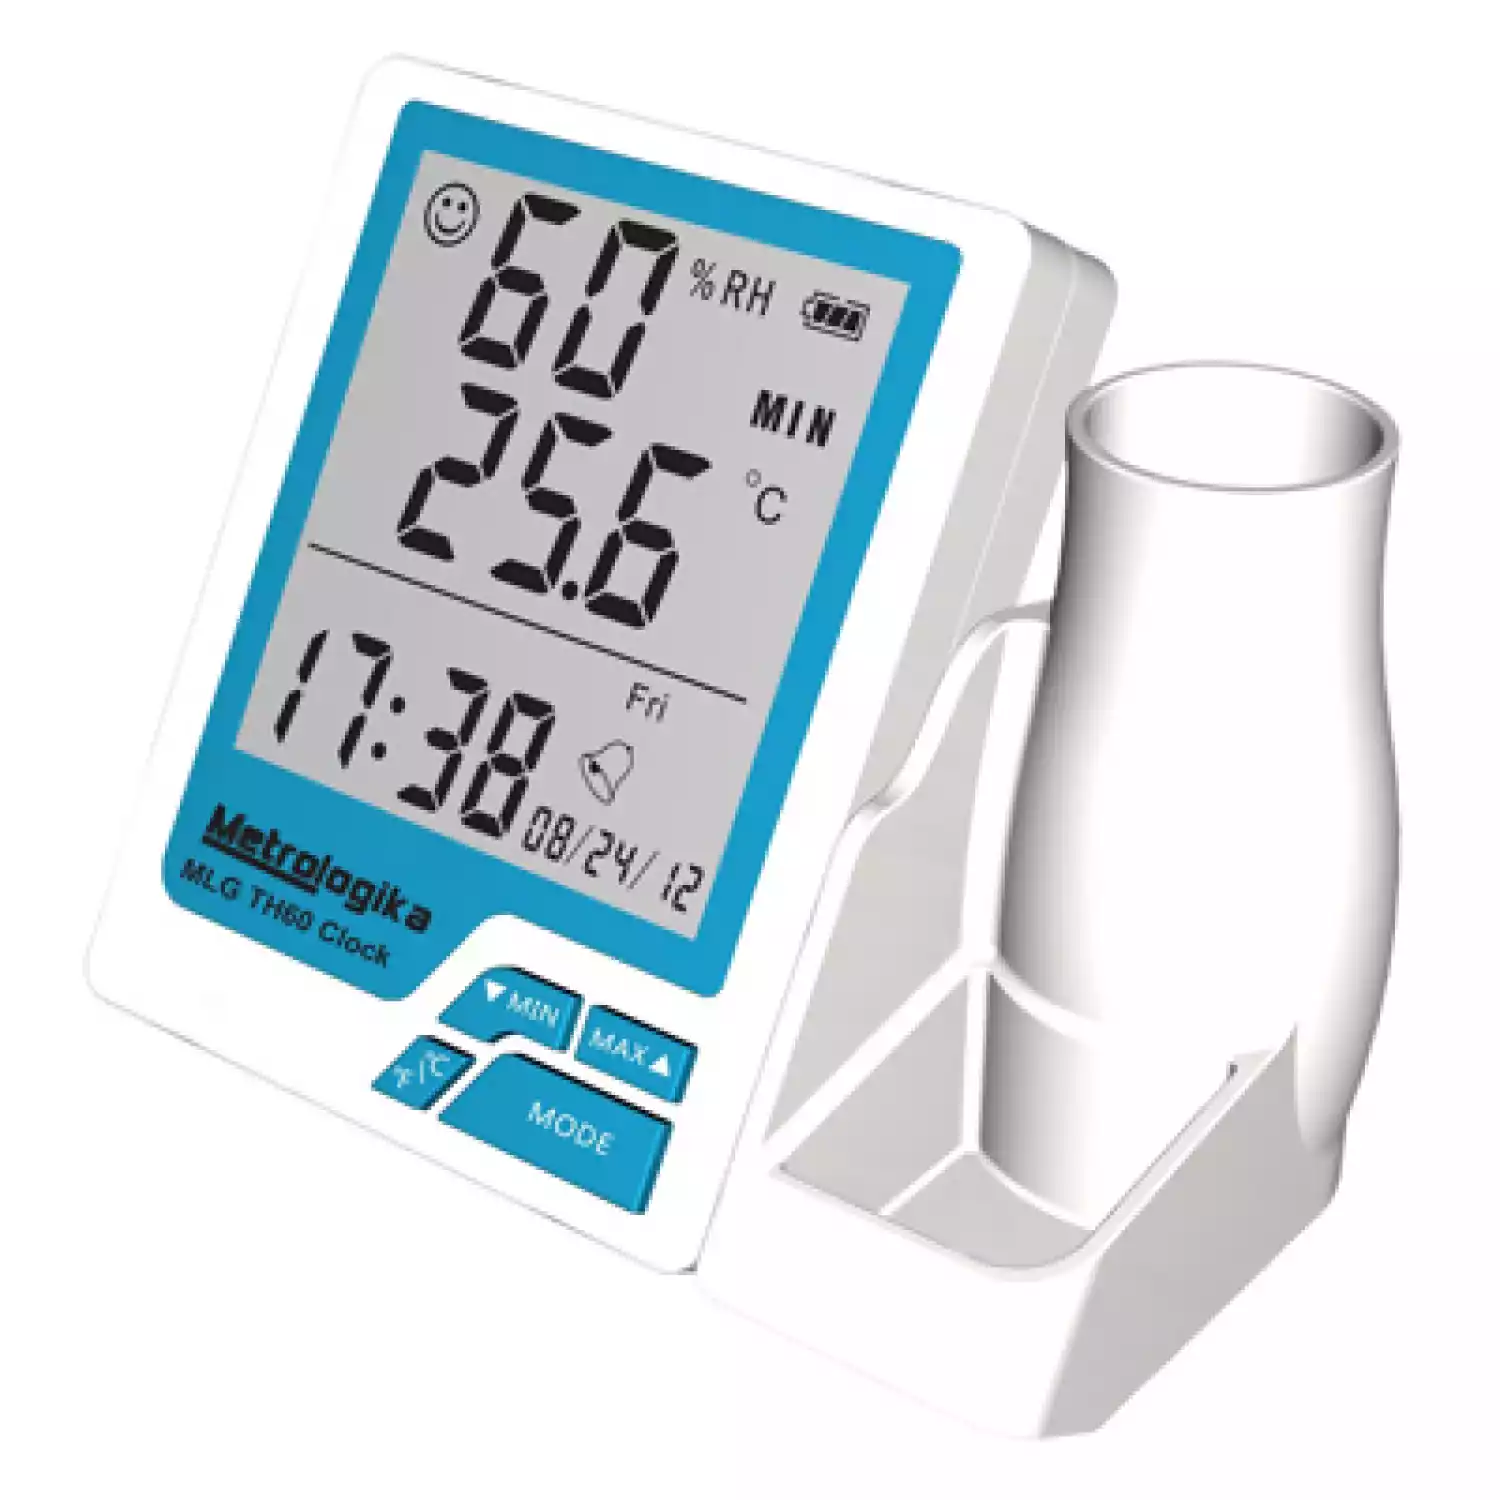 Термогигрометр MLG TH60 Clock - 1